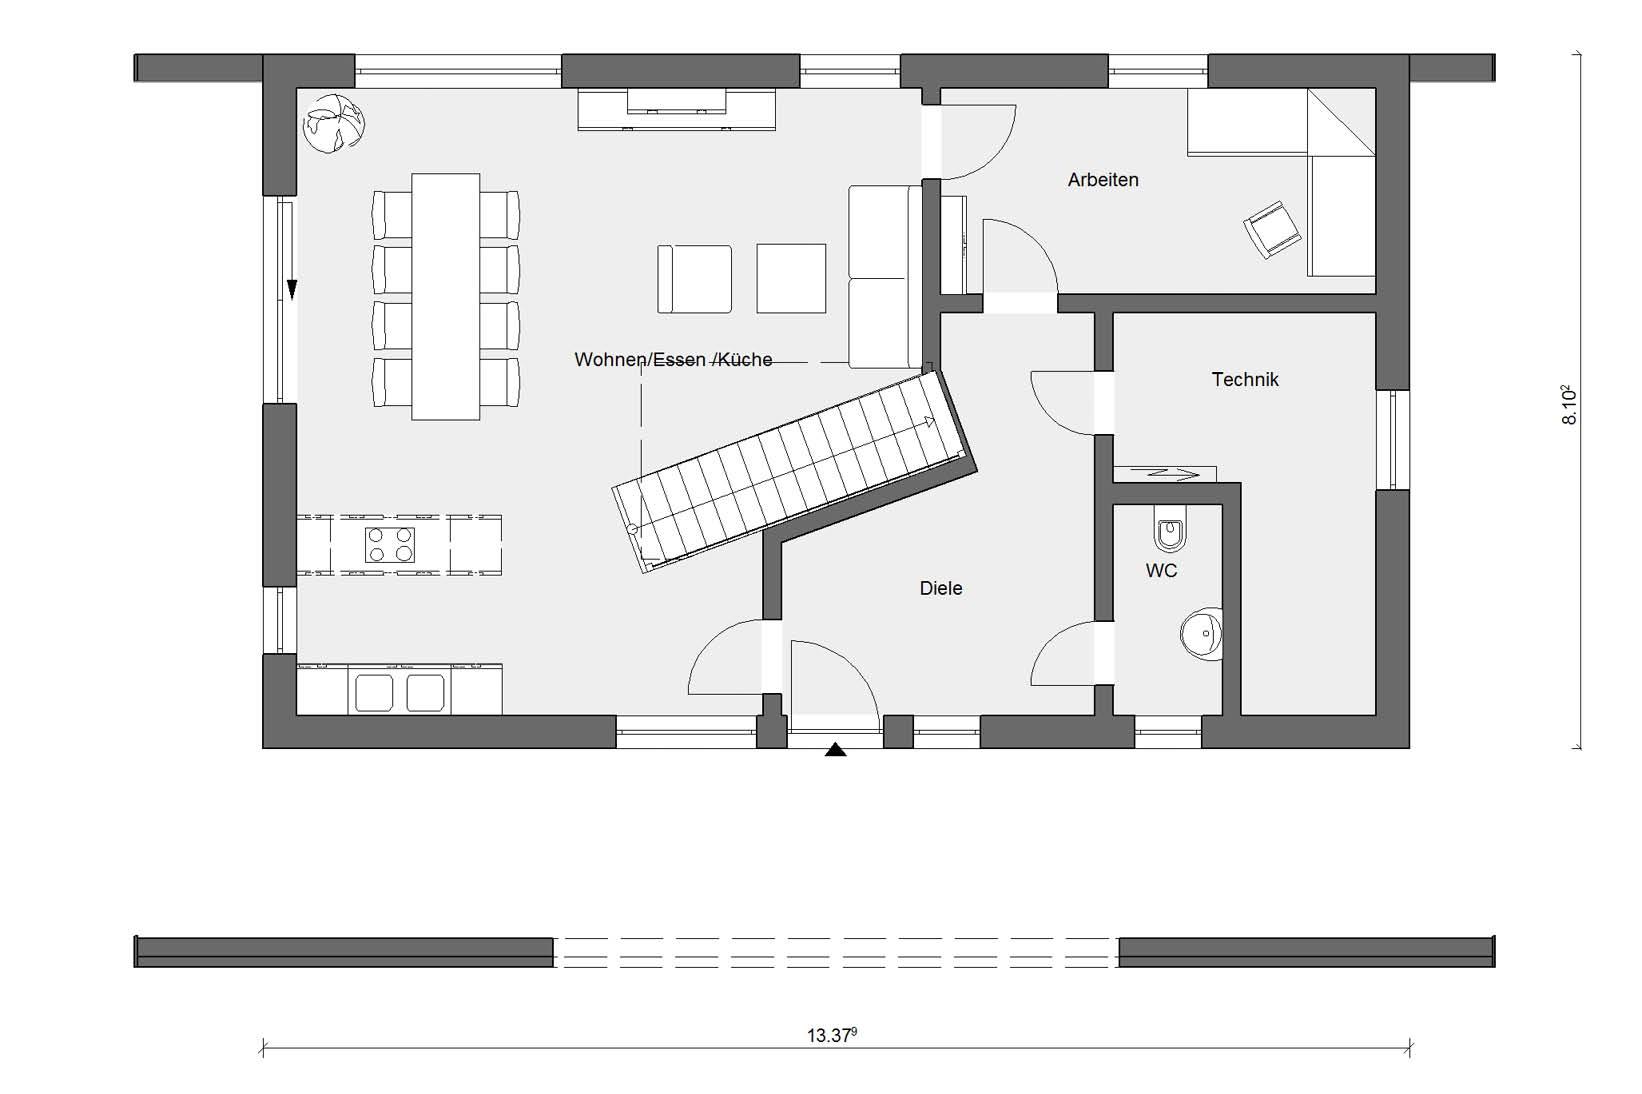 Ground floor plan E 15-170.1 prefabricated house with energy plus